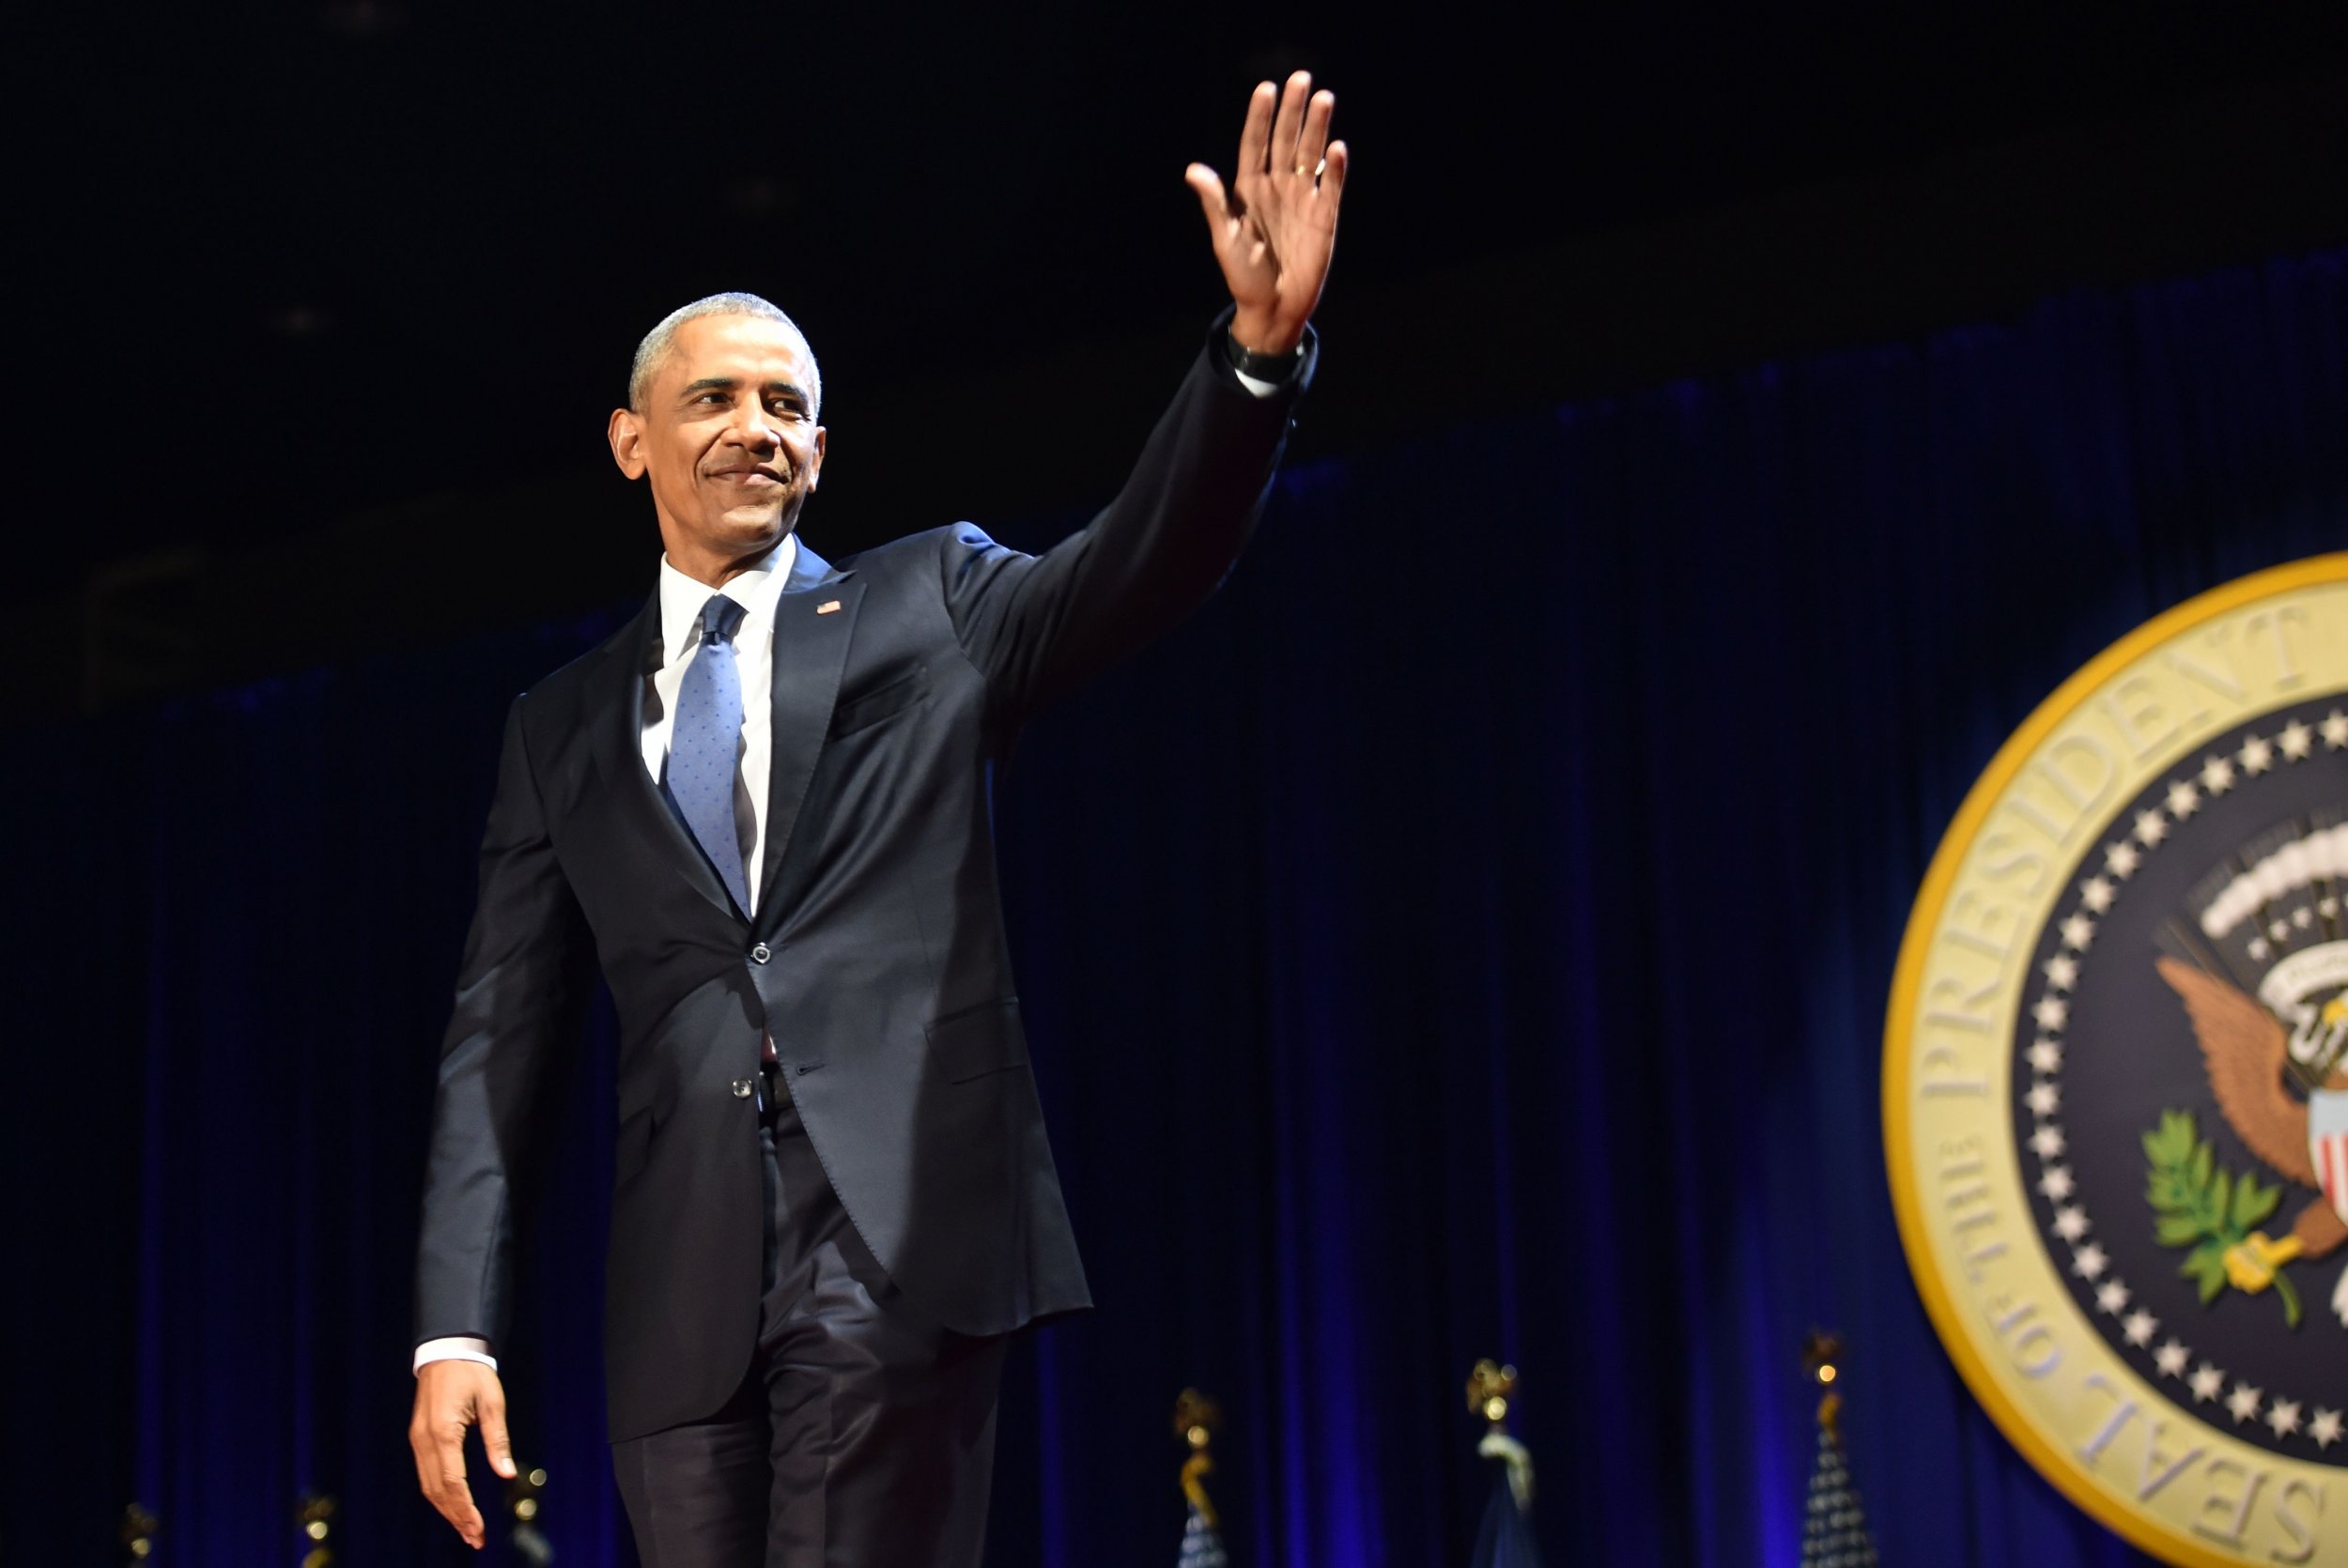 Barack Obama farewell speech